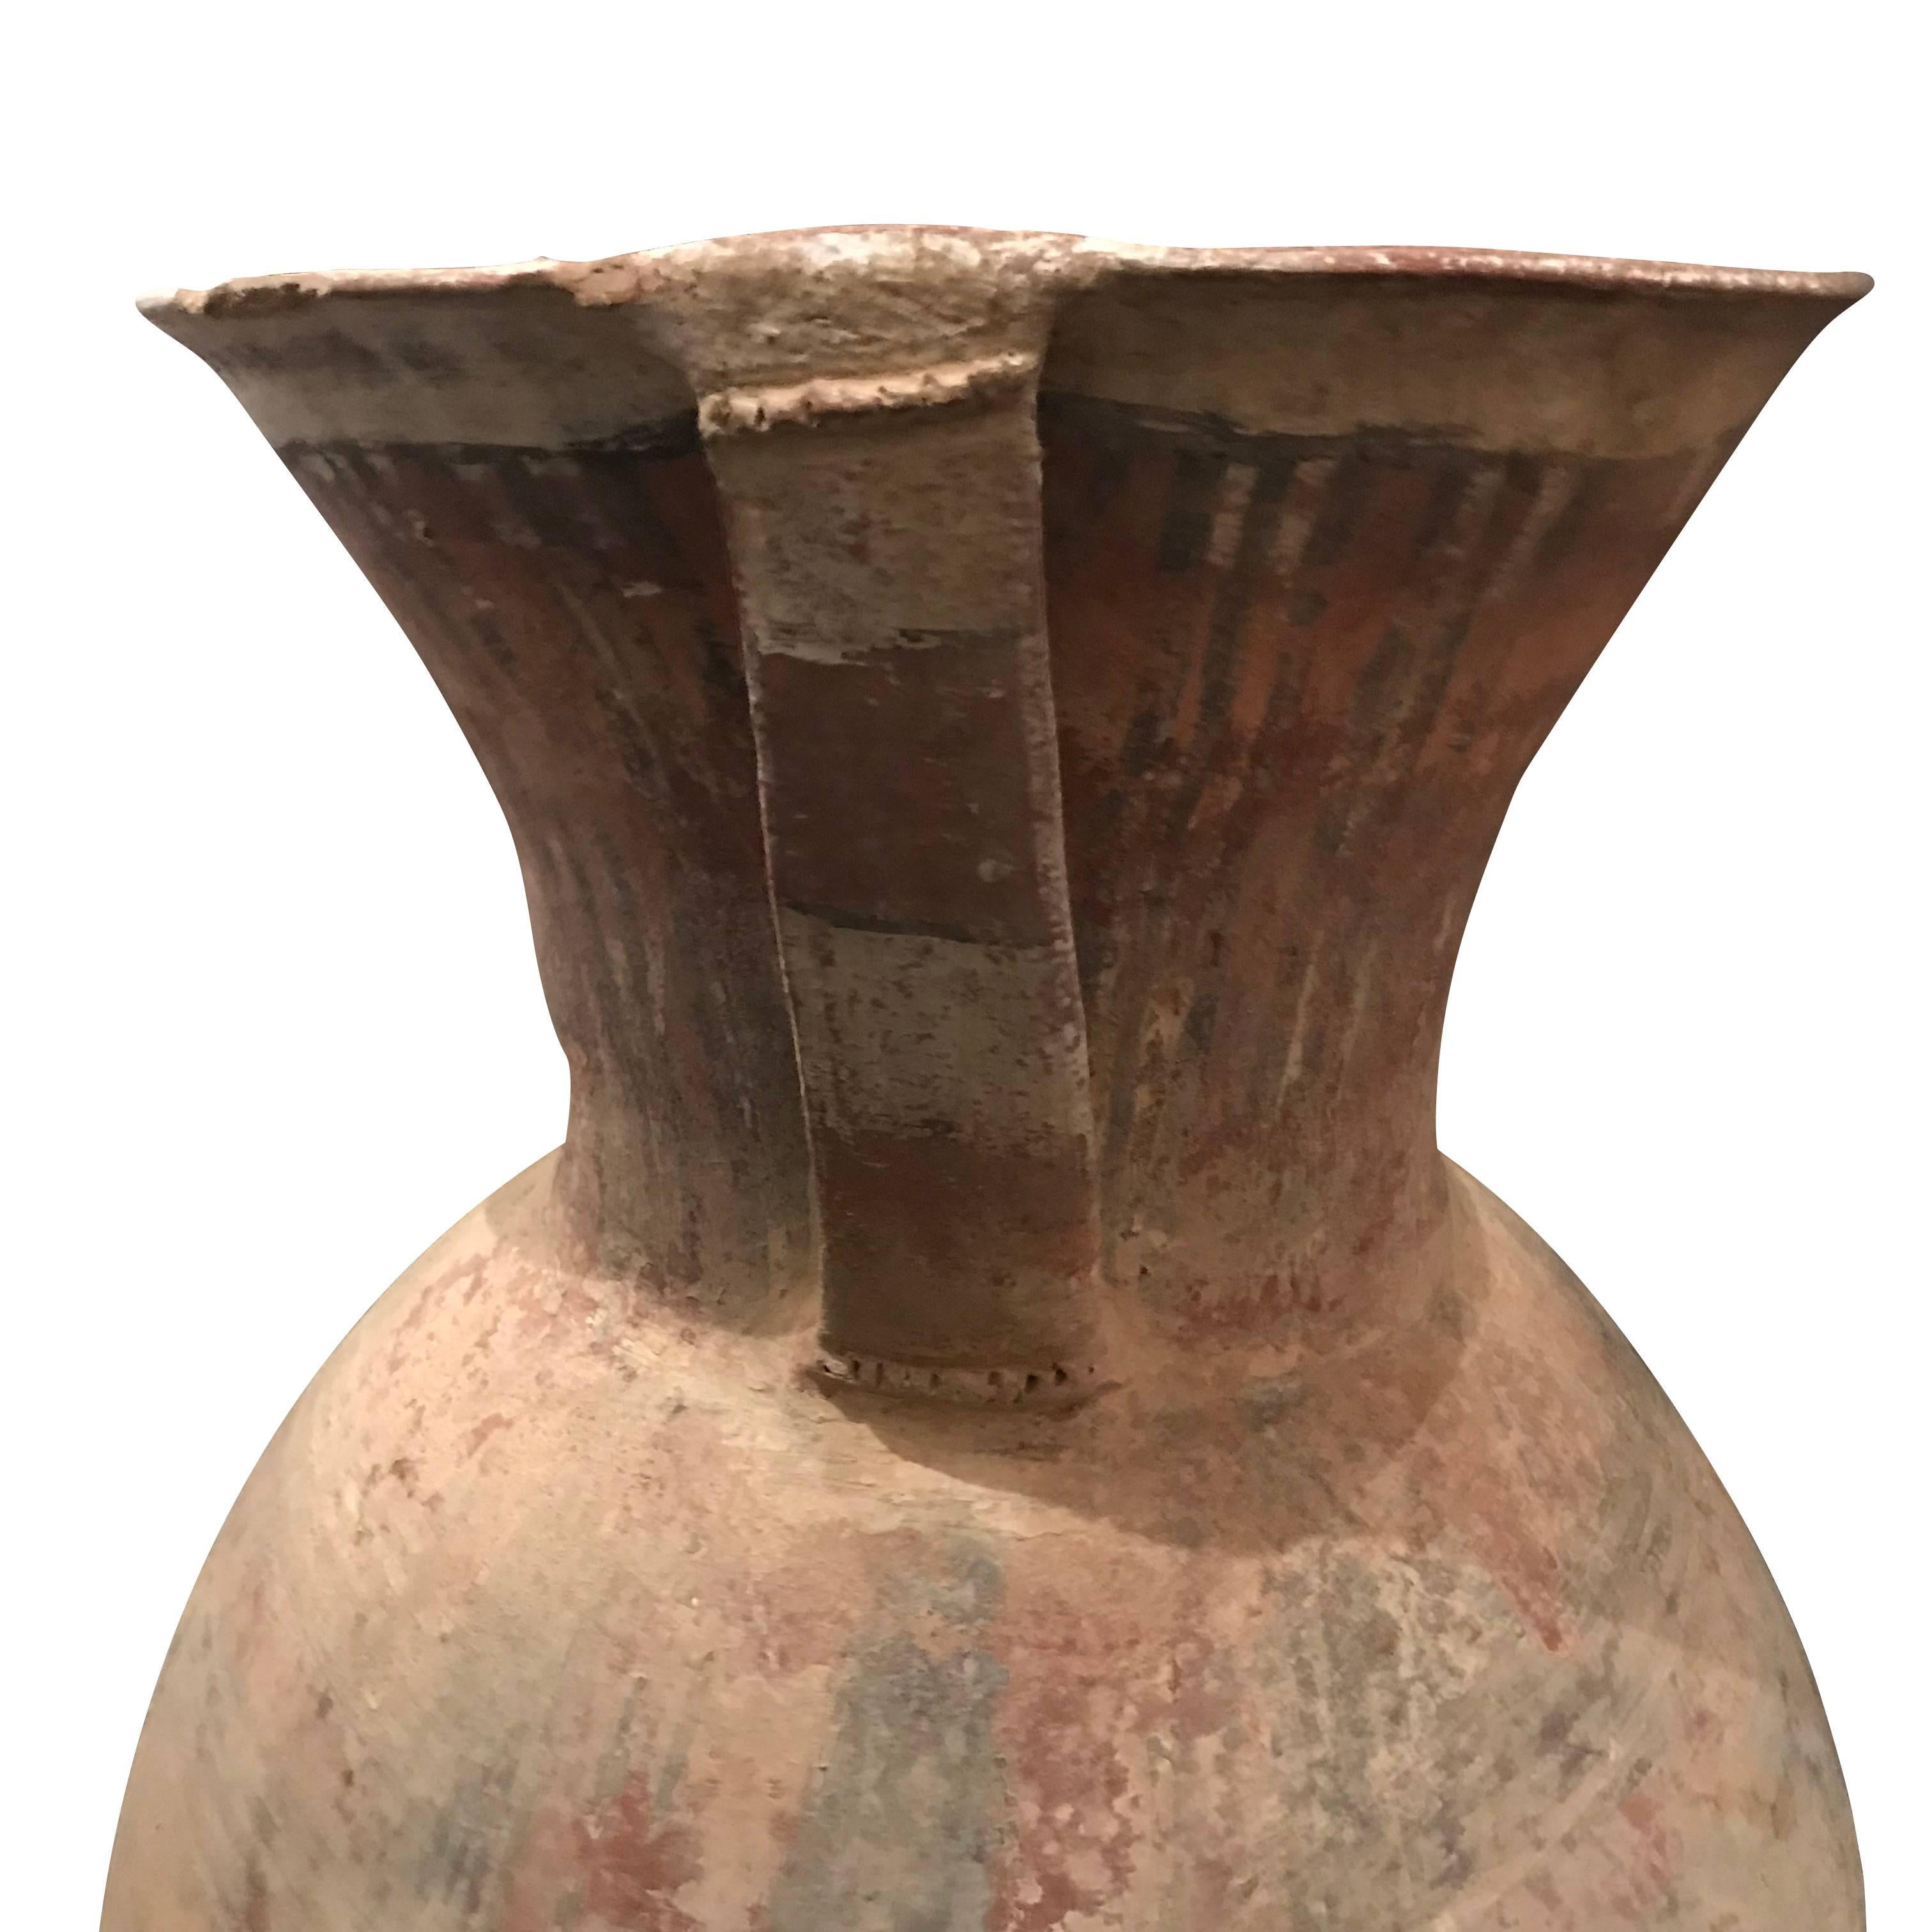 Nigerien Niger Handled Painted Terra Cotta Vase, Africa, 1920s